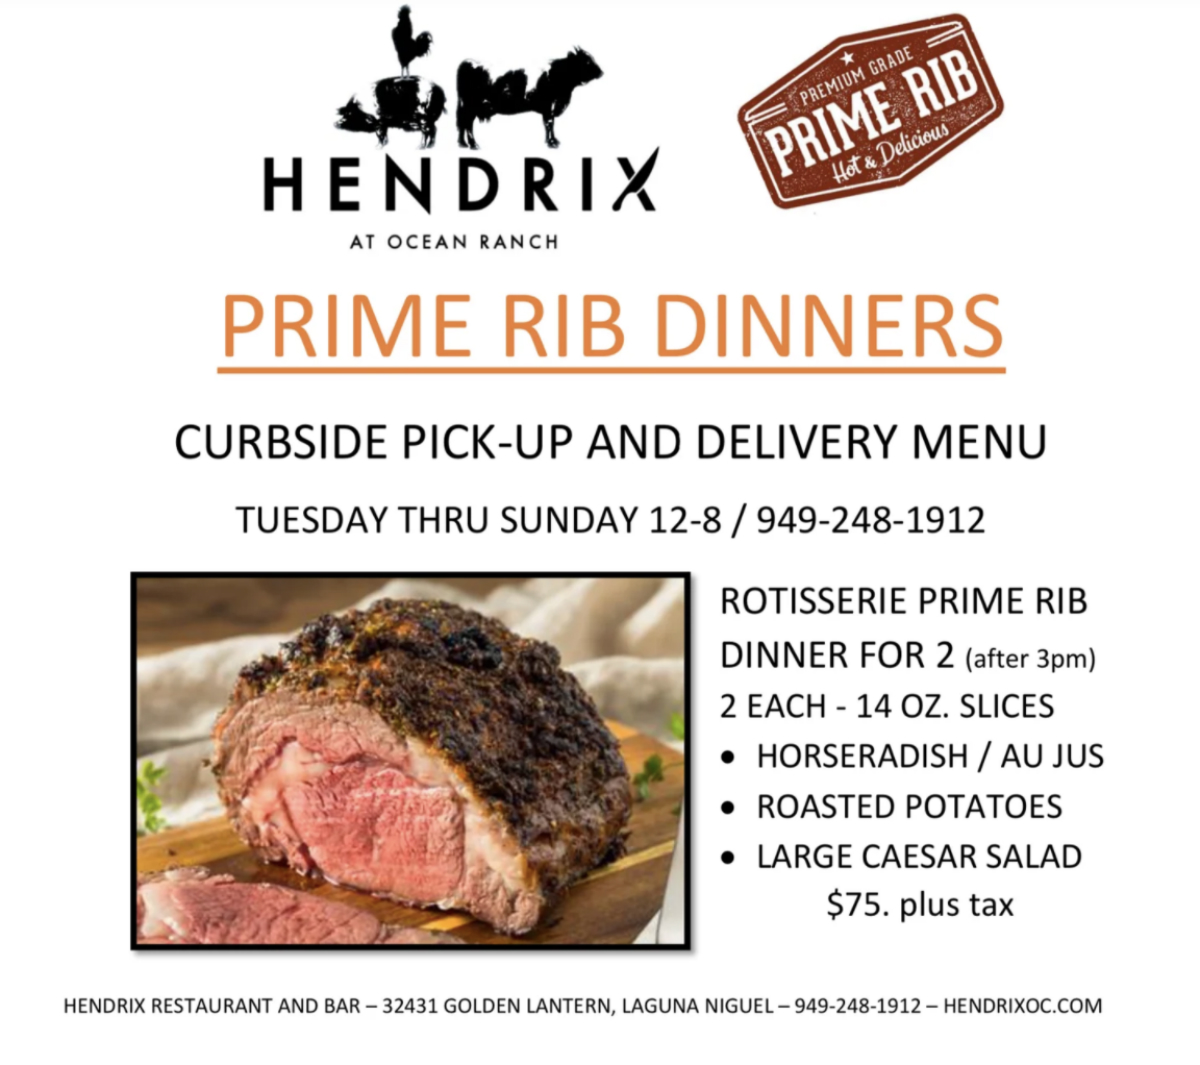 Hendrix Offers Prime Rib Dinners